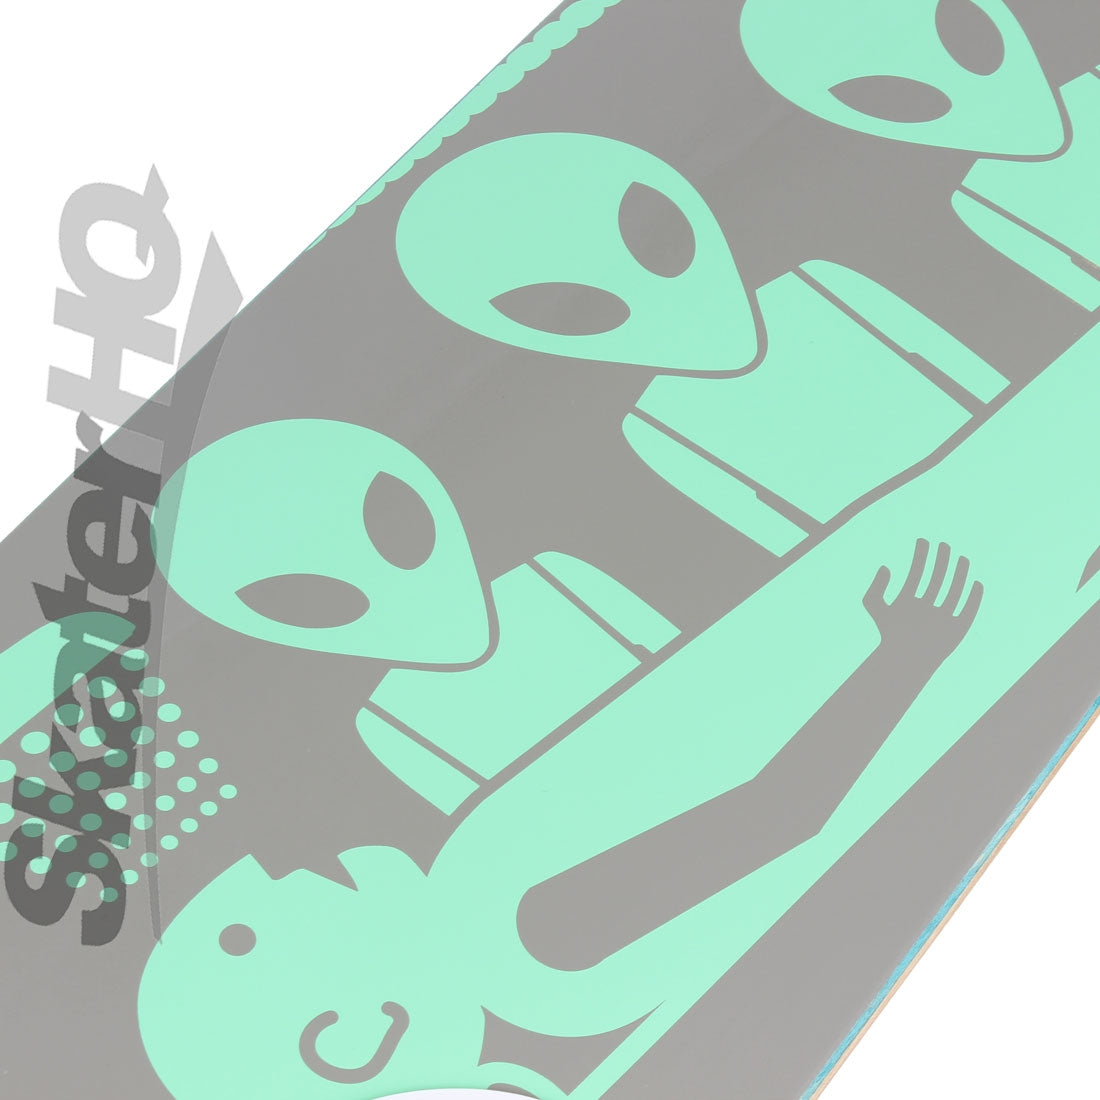 Alien Workshop Abduction 8.0 Deck - Grey/Green Skateboard Decks Modern Street